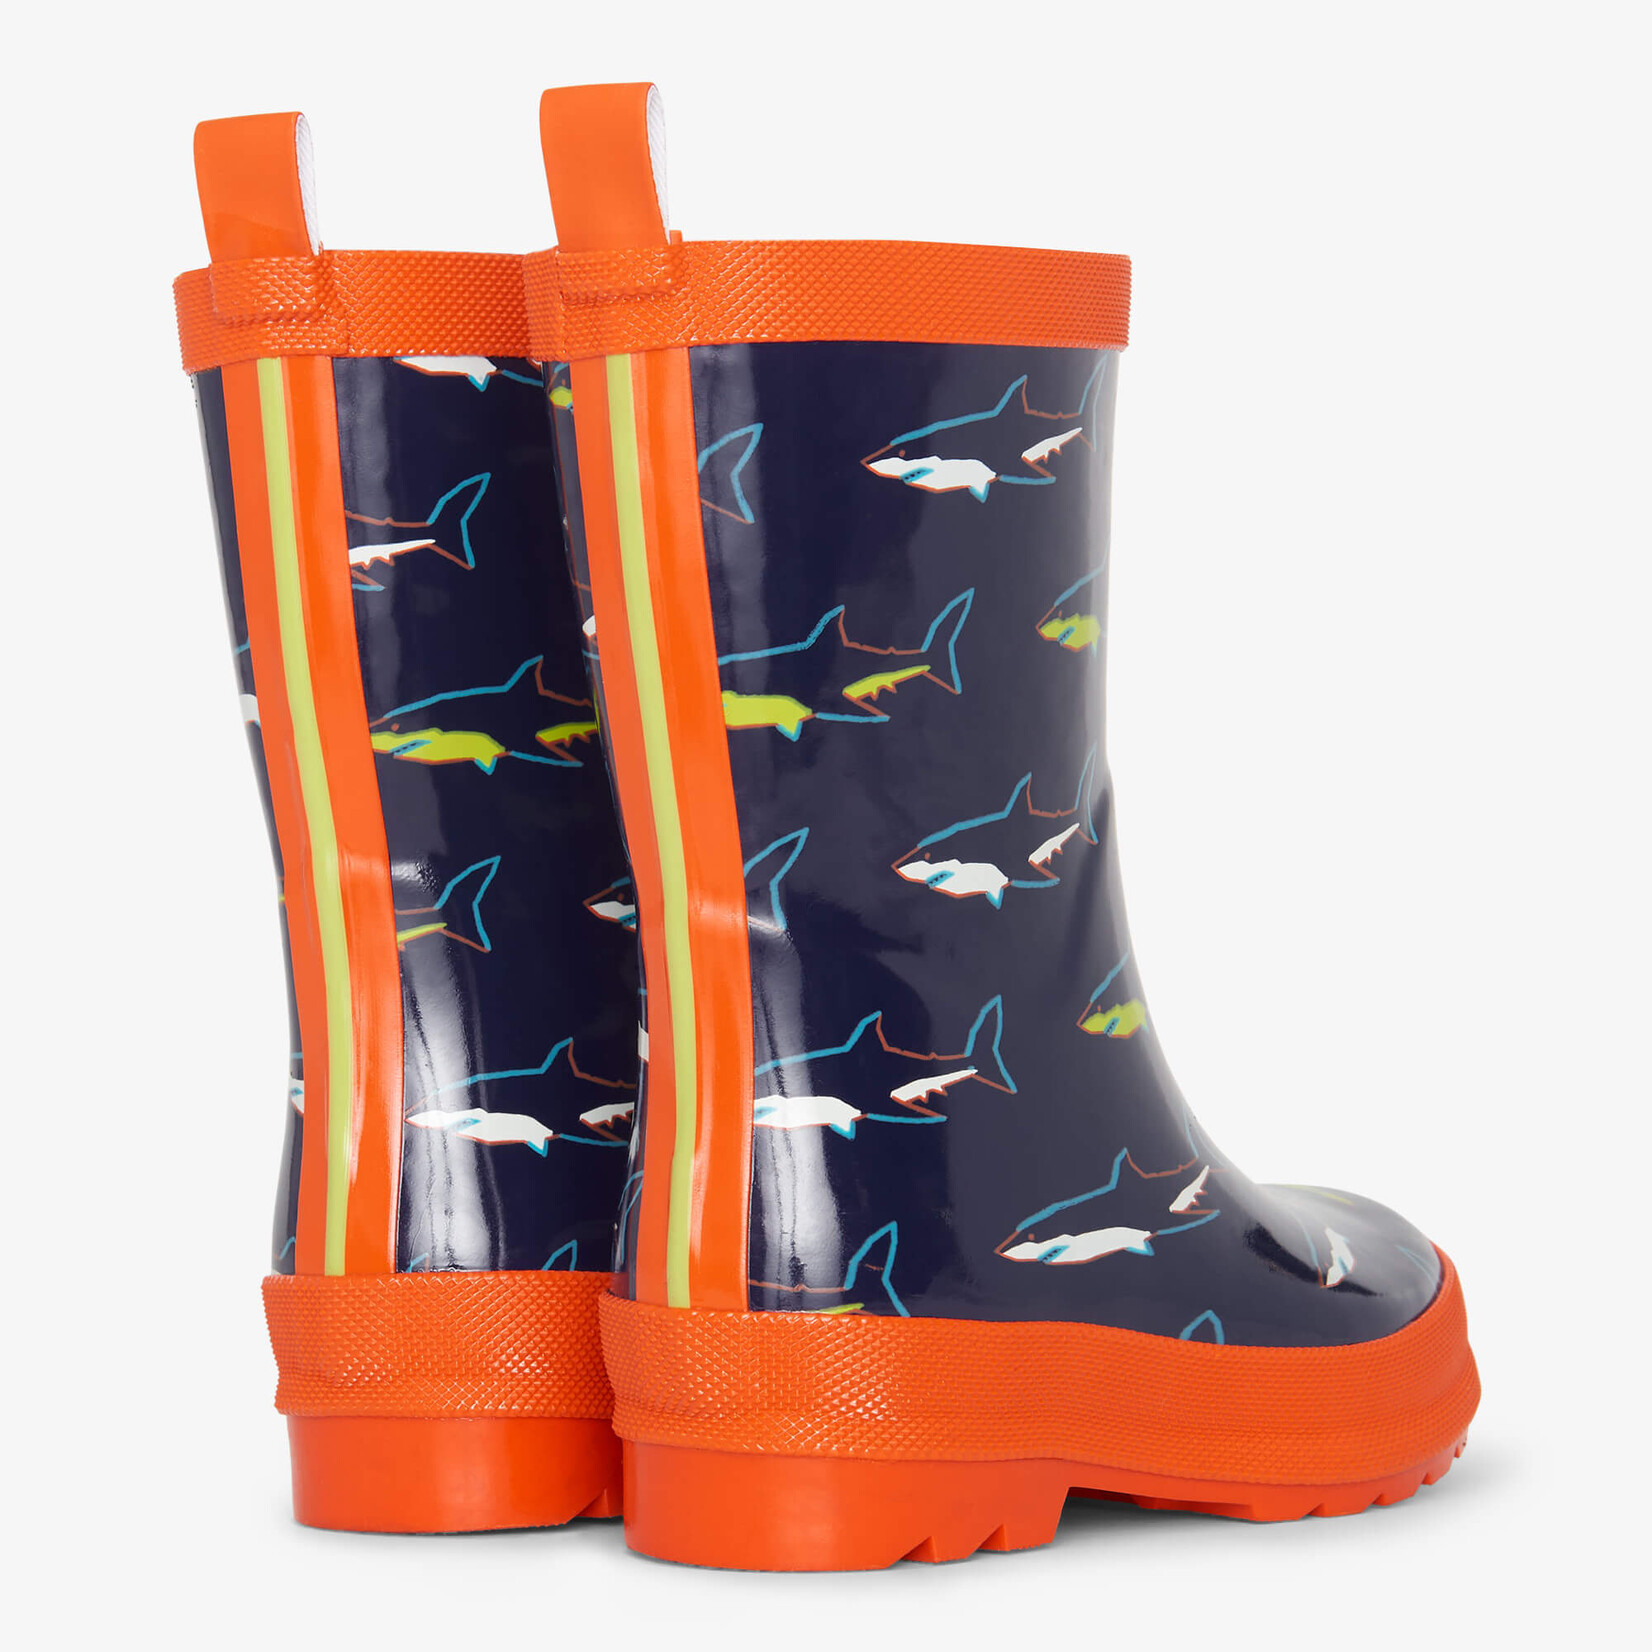 Hatley Hatley Shiny Rain Boots Shark Patriot Blue